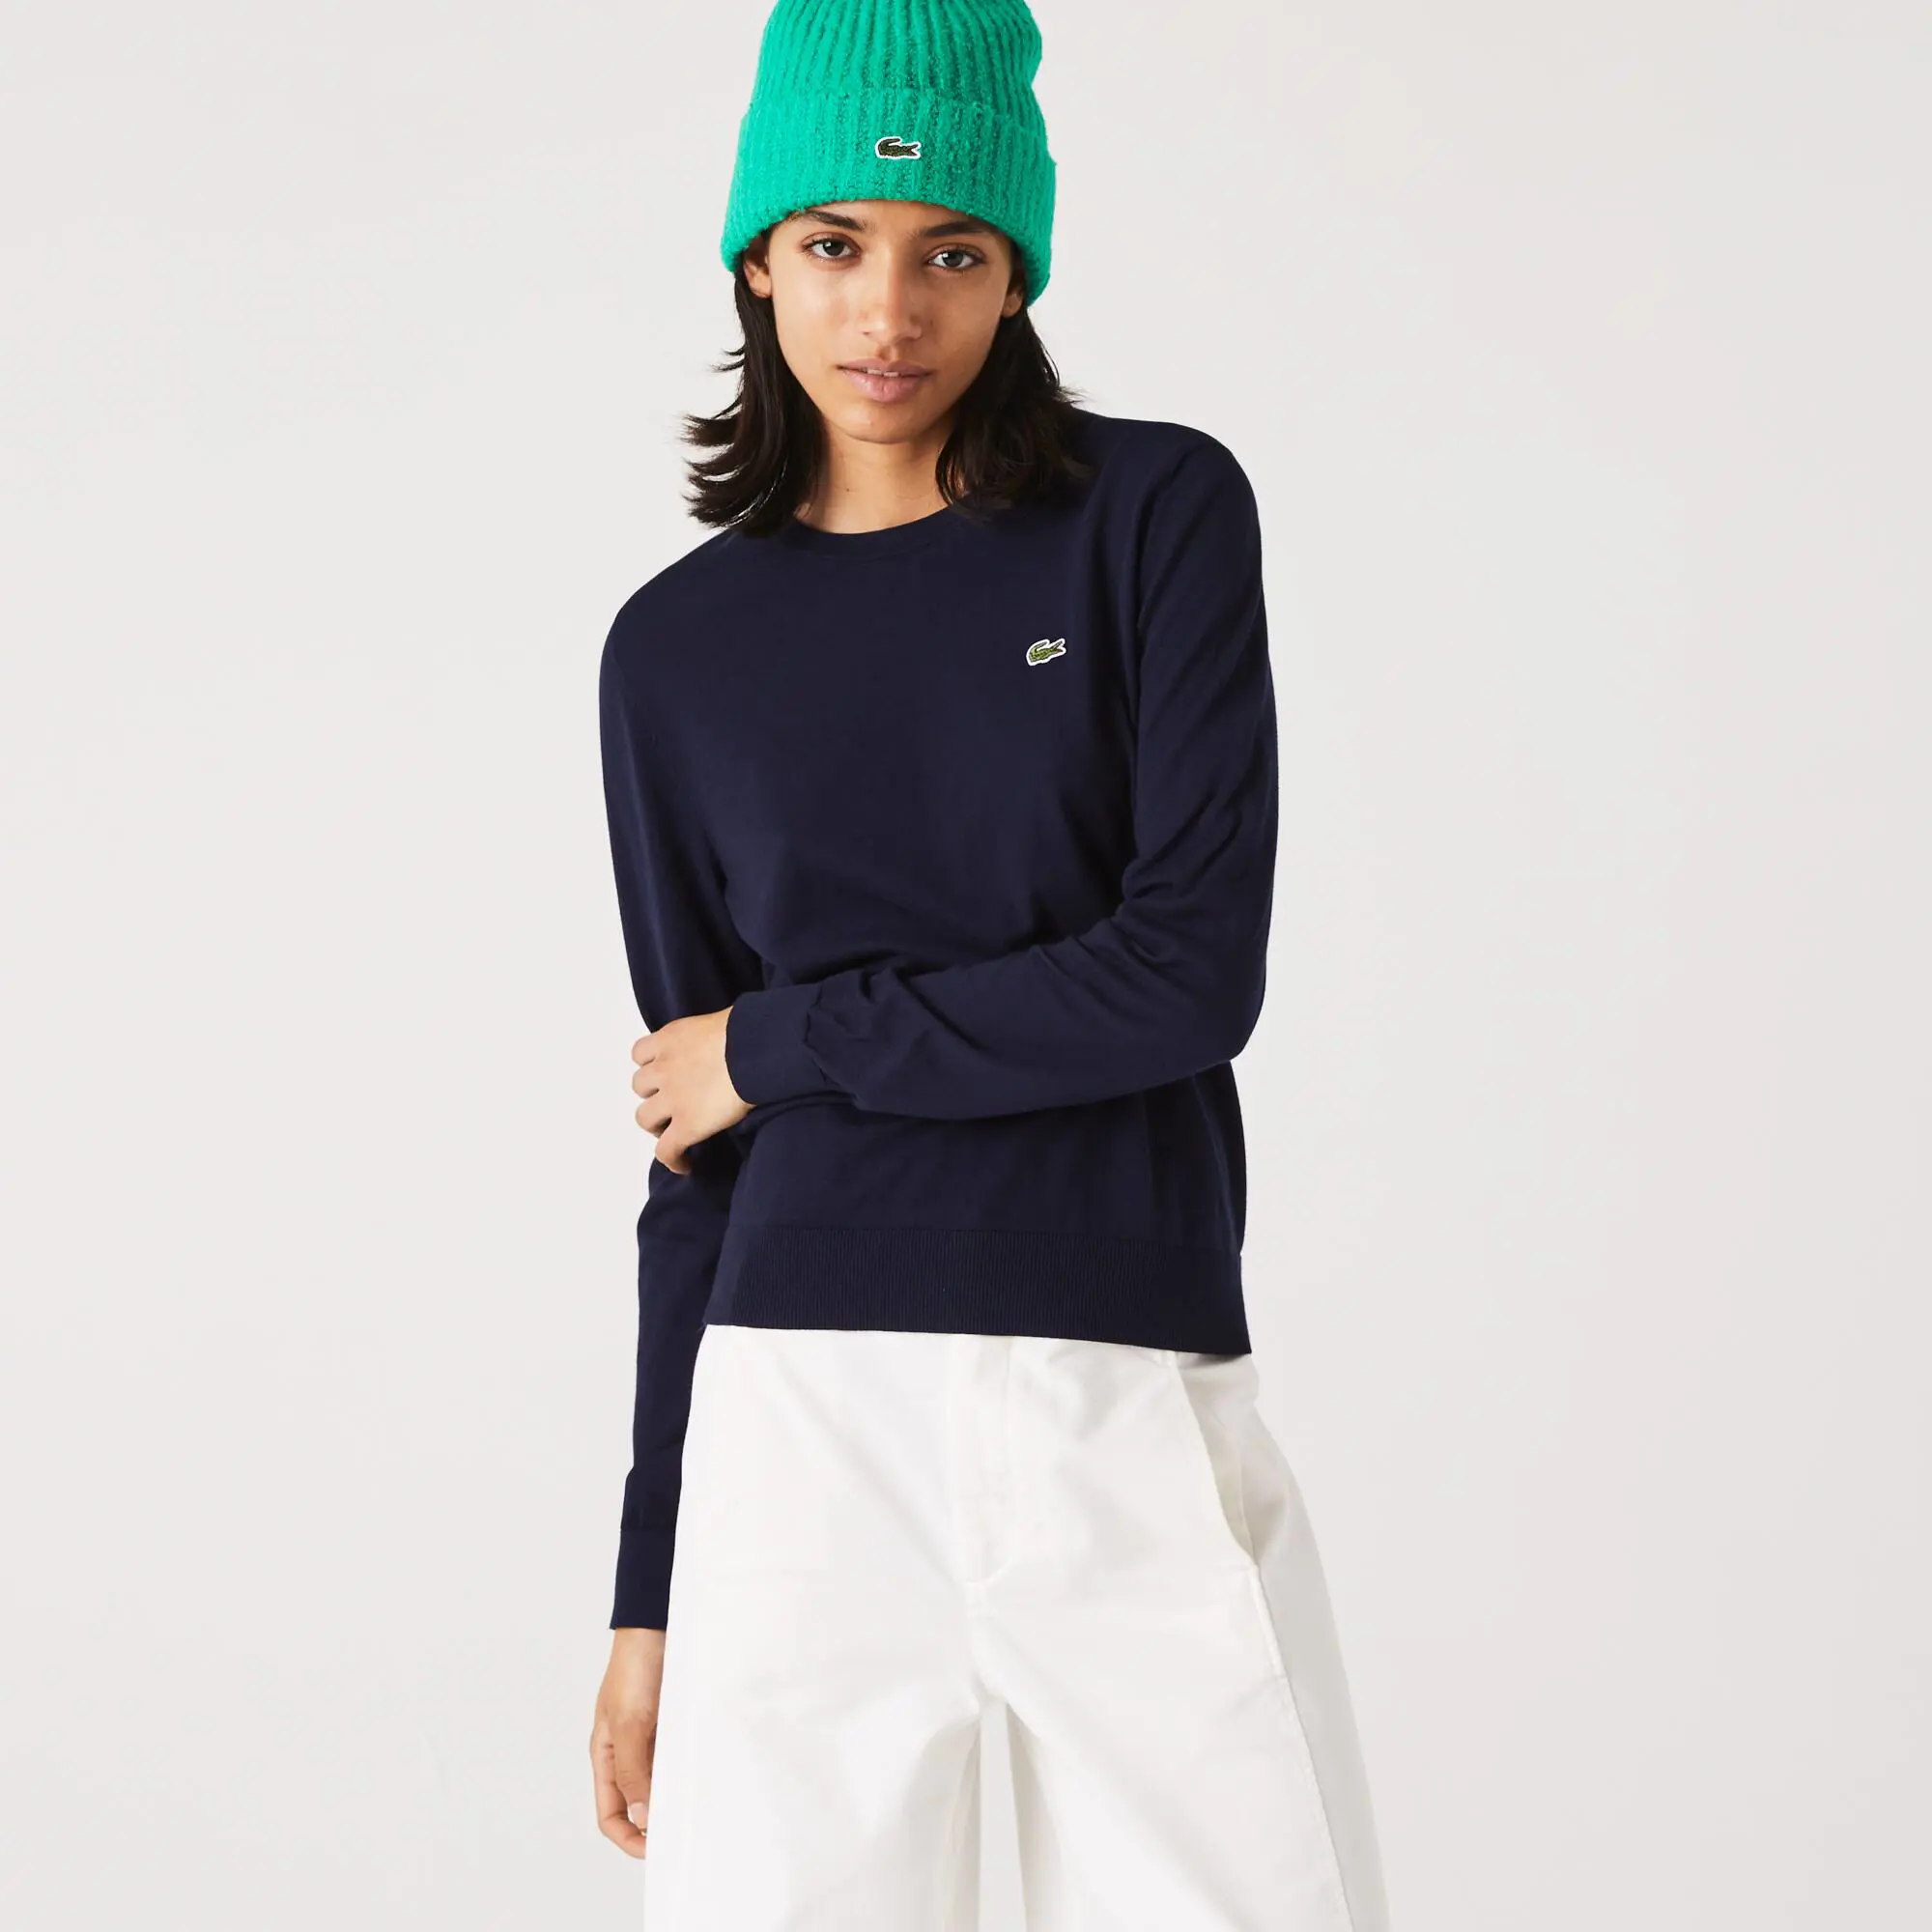 Lacoste Women’s Crew Neck Organic Cotton Sweater. 1